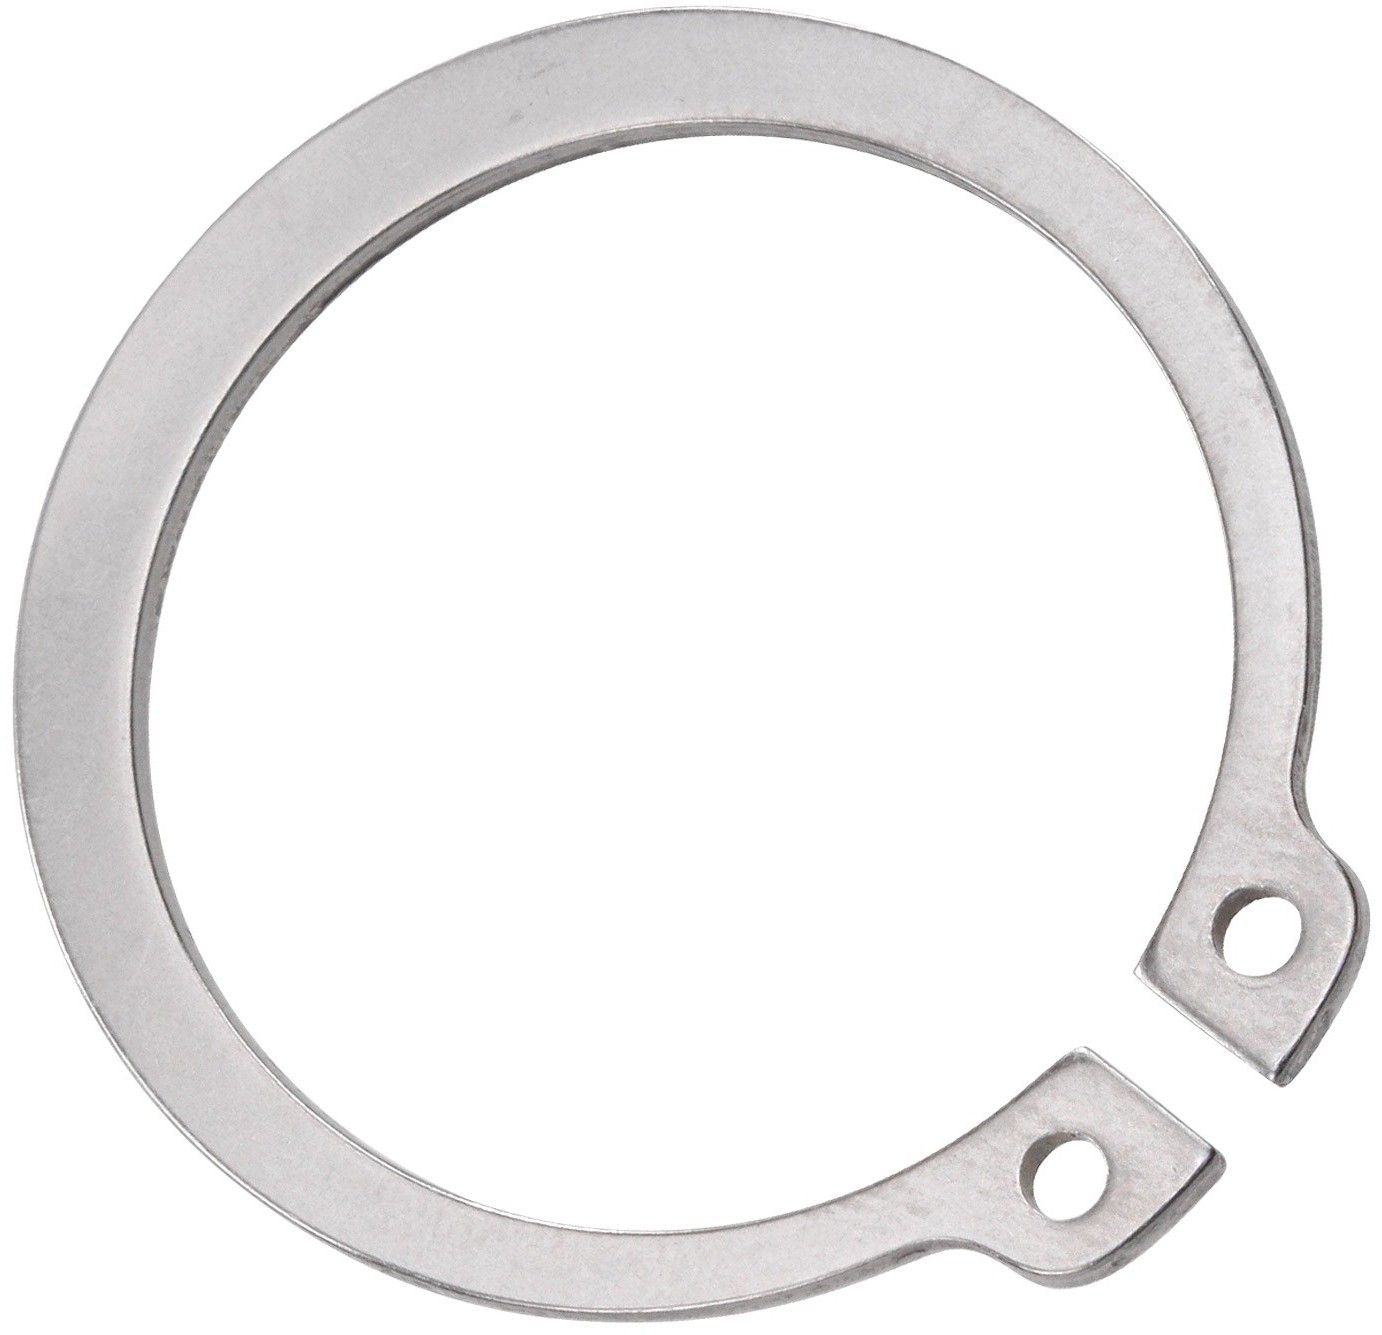 Кольцо стопорное наружное 135х4 DIN 471, нержавеющая сталь 1.4122 (А2) - фото